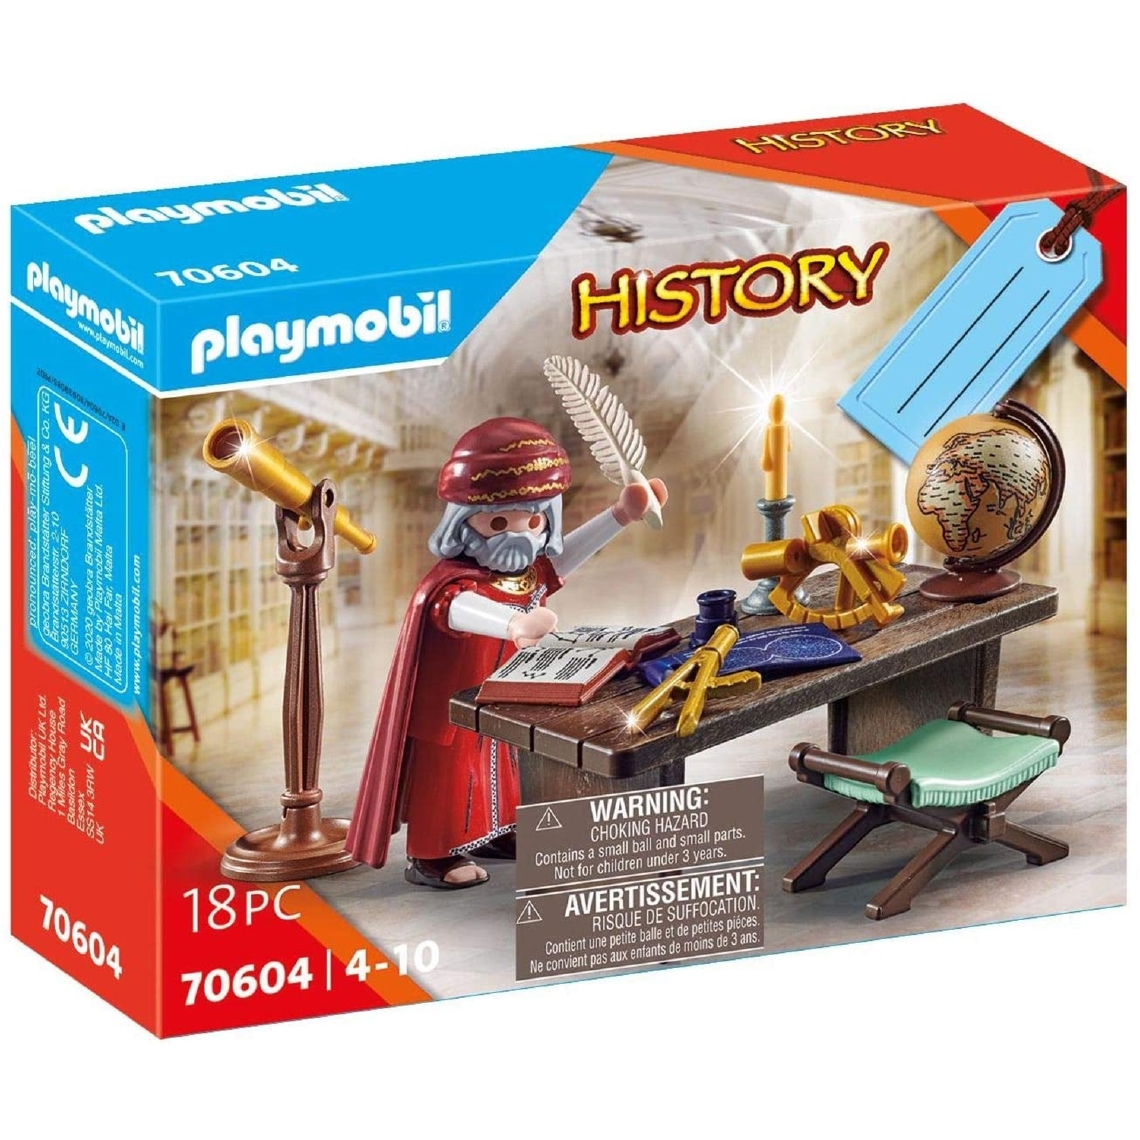 Playmobil - PLAYMOBIL 70604 - History Astronome Coffret Cadeau - Playmobil